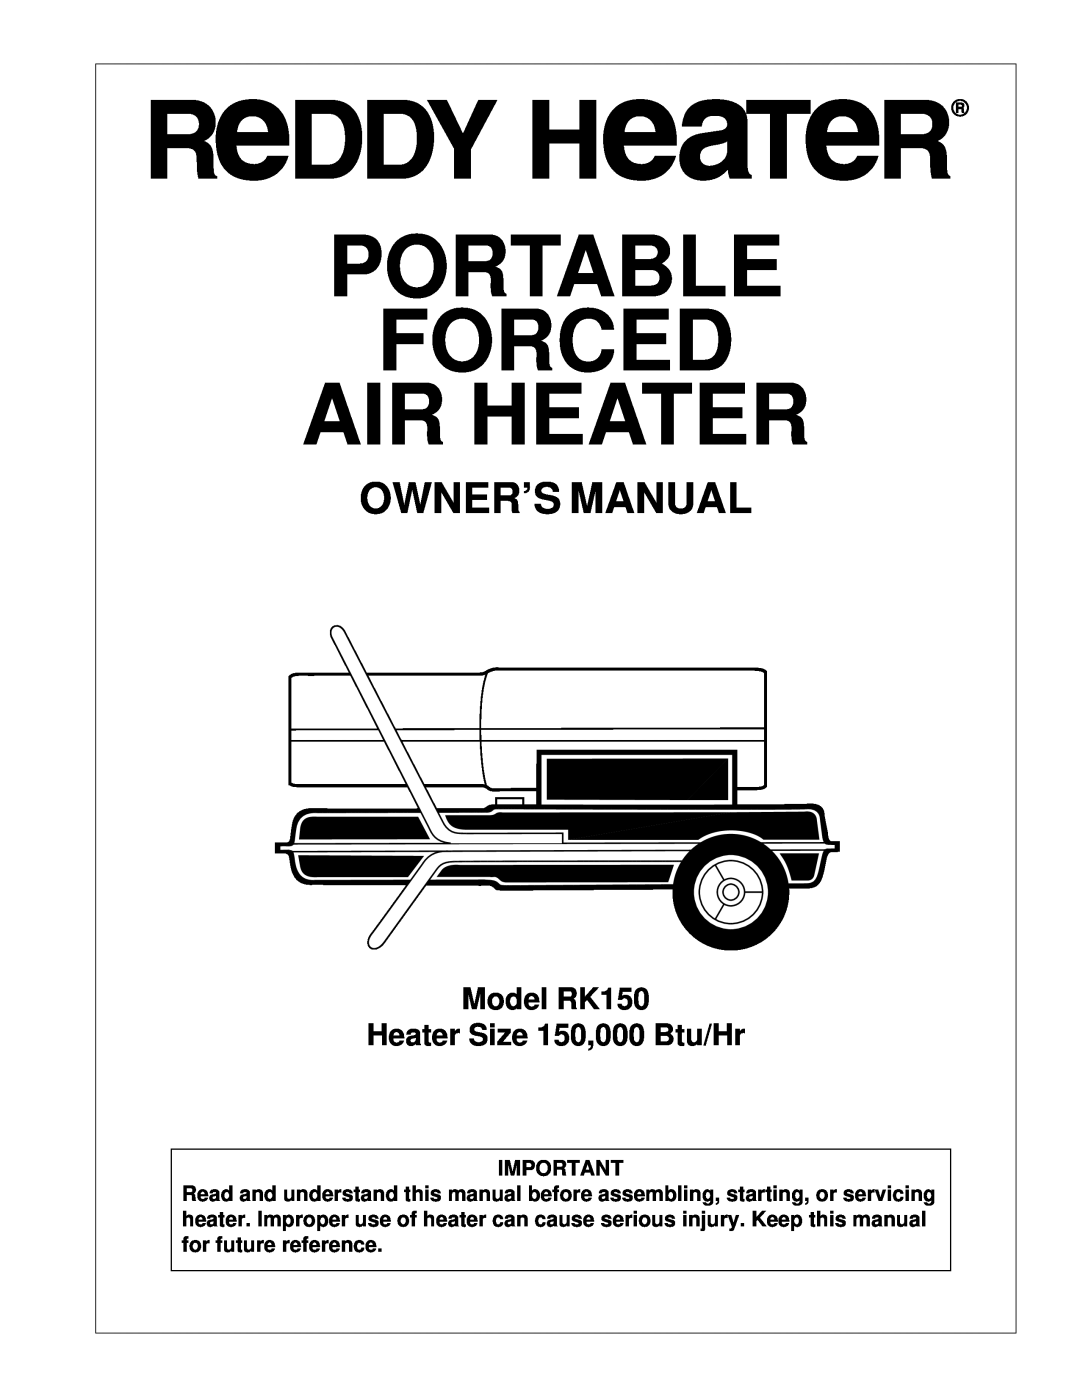 Desa owner manual Model RK150 Heater Size 150,000 Btu/Hr, Portable Forced Air Heater, Side Front Handle, Pfa/Pv 